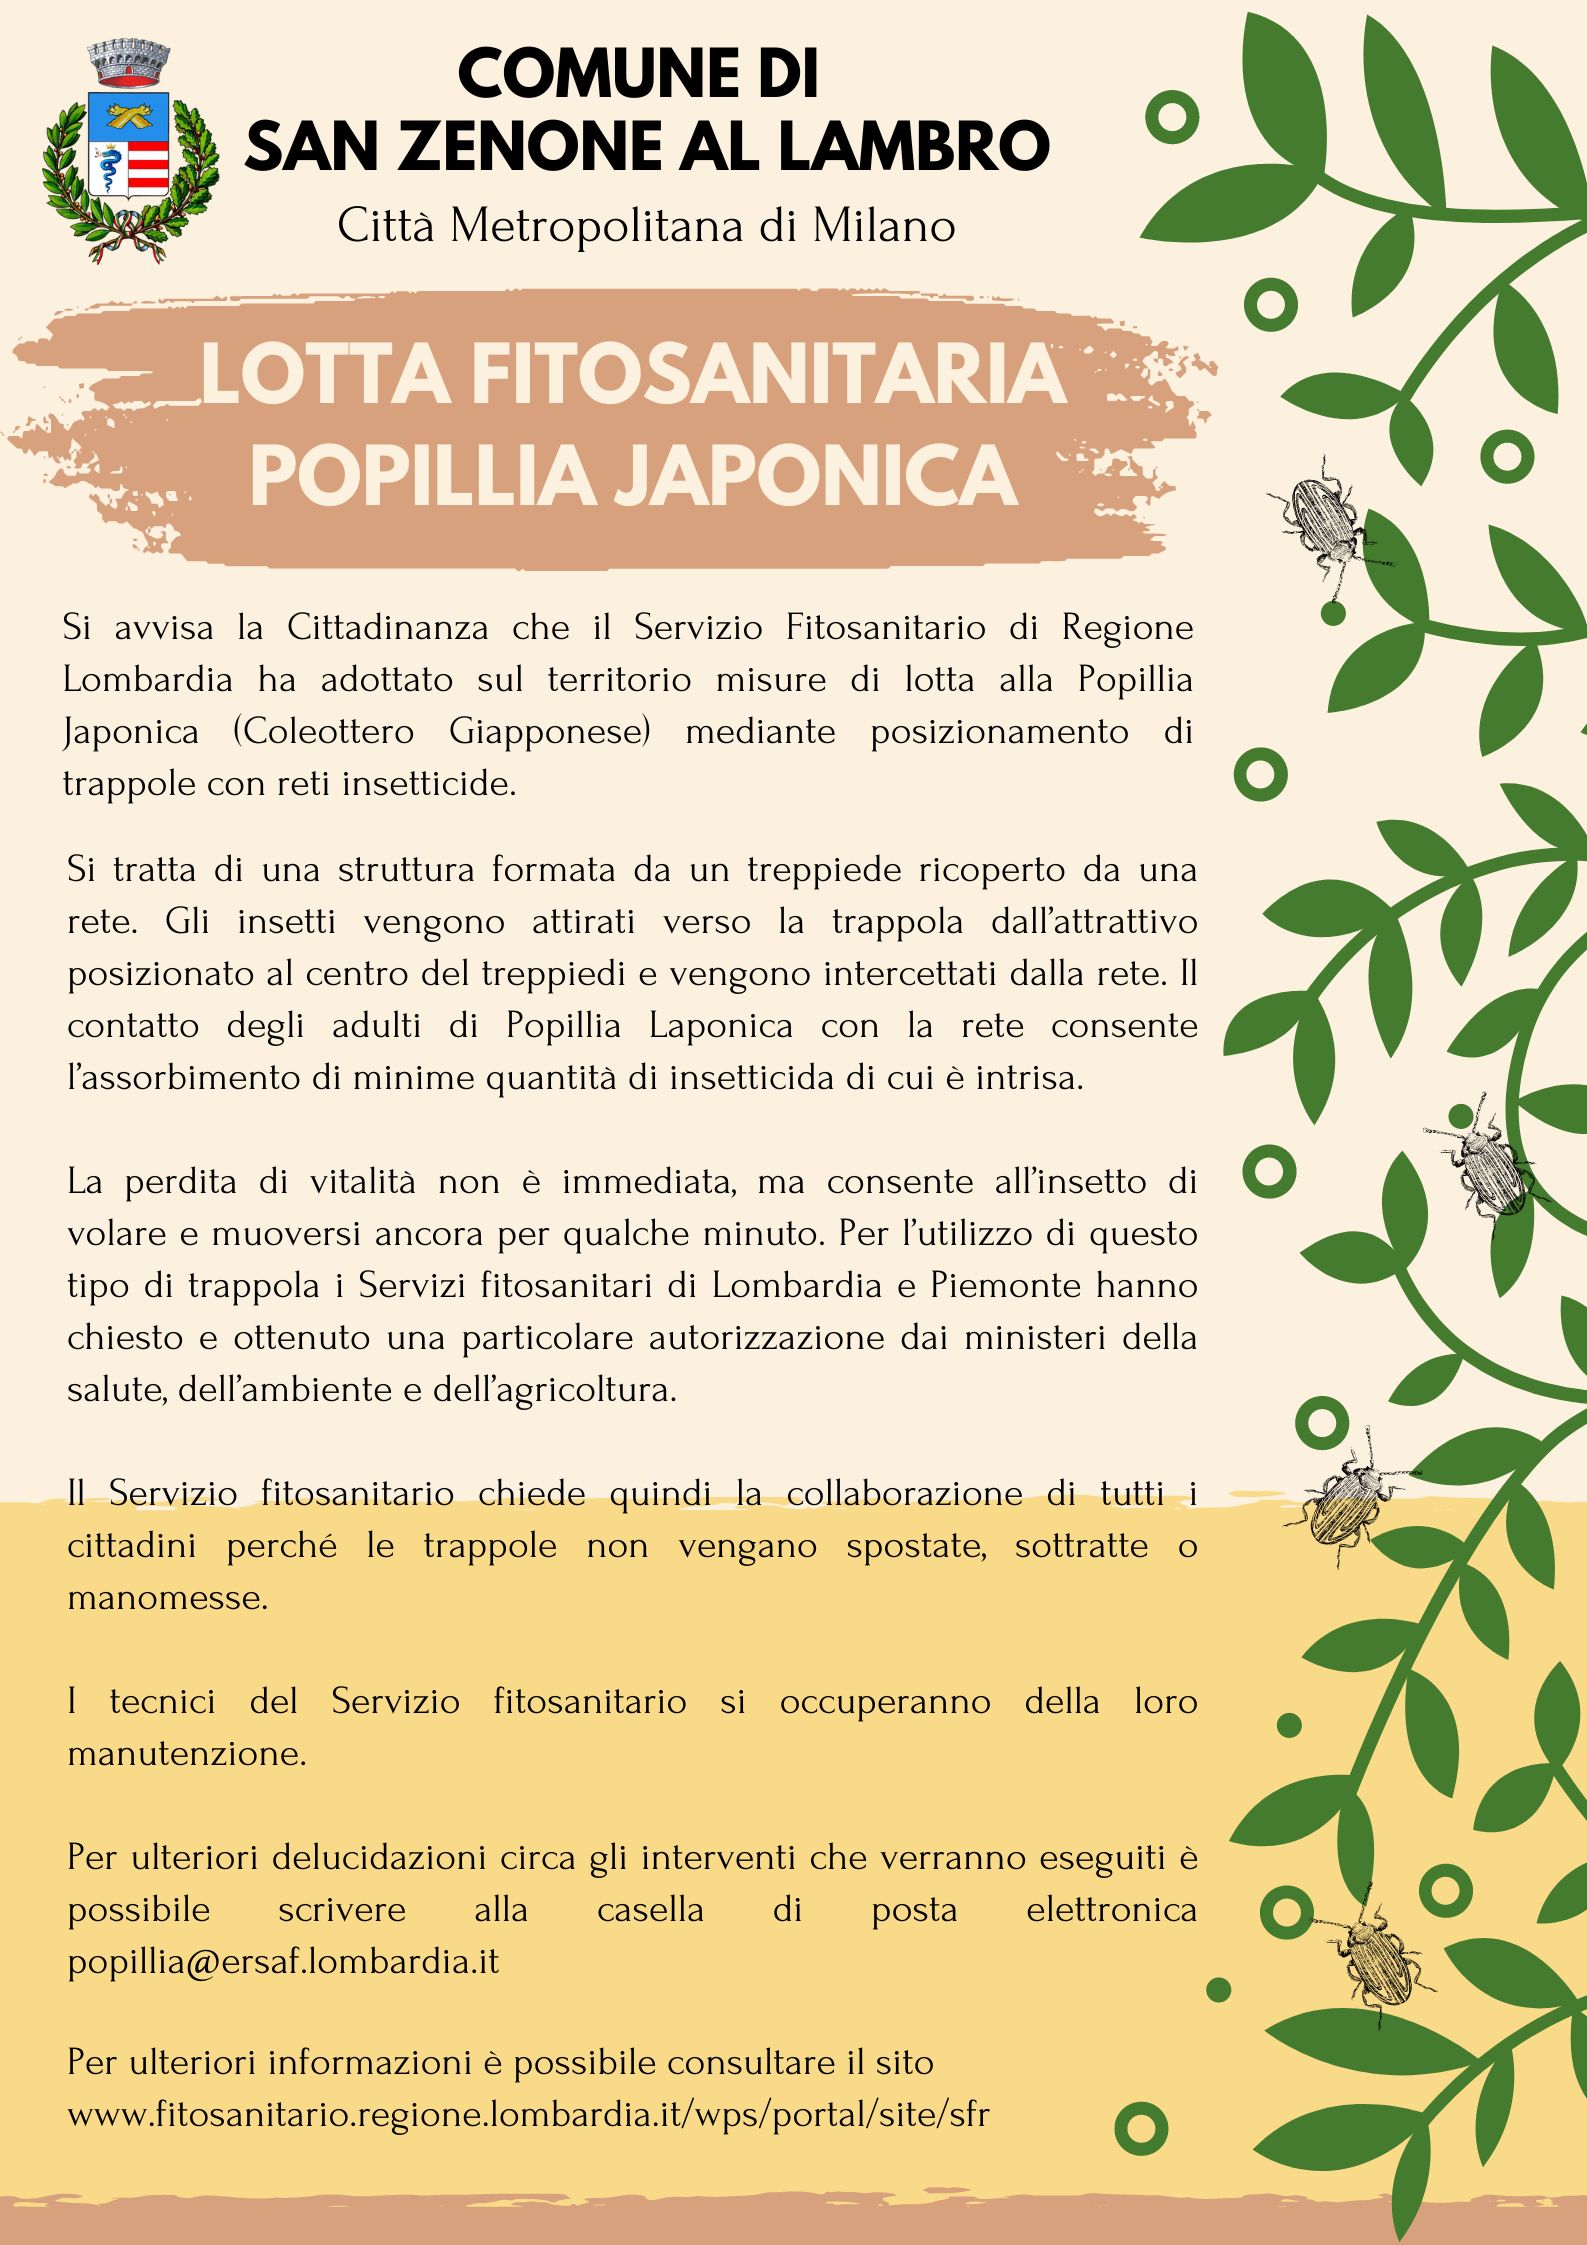 LOTTA FITOSANITARIA - Popillia Japonica